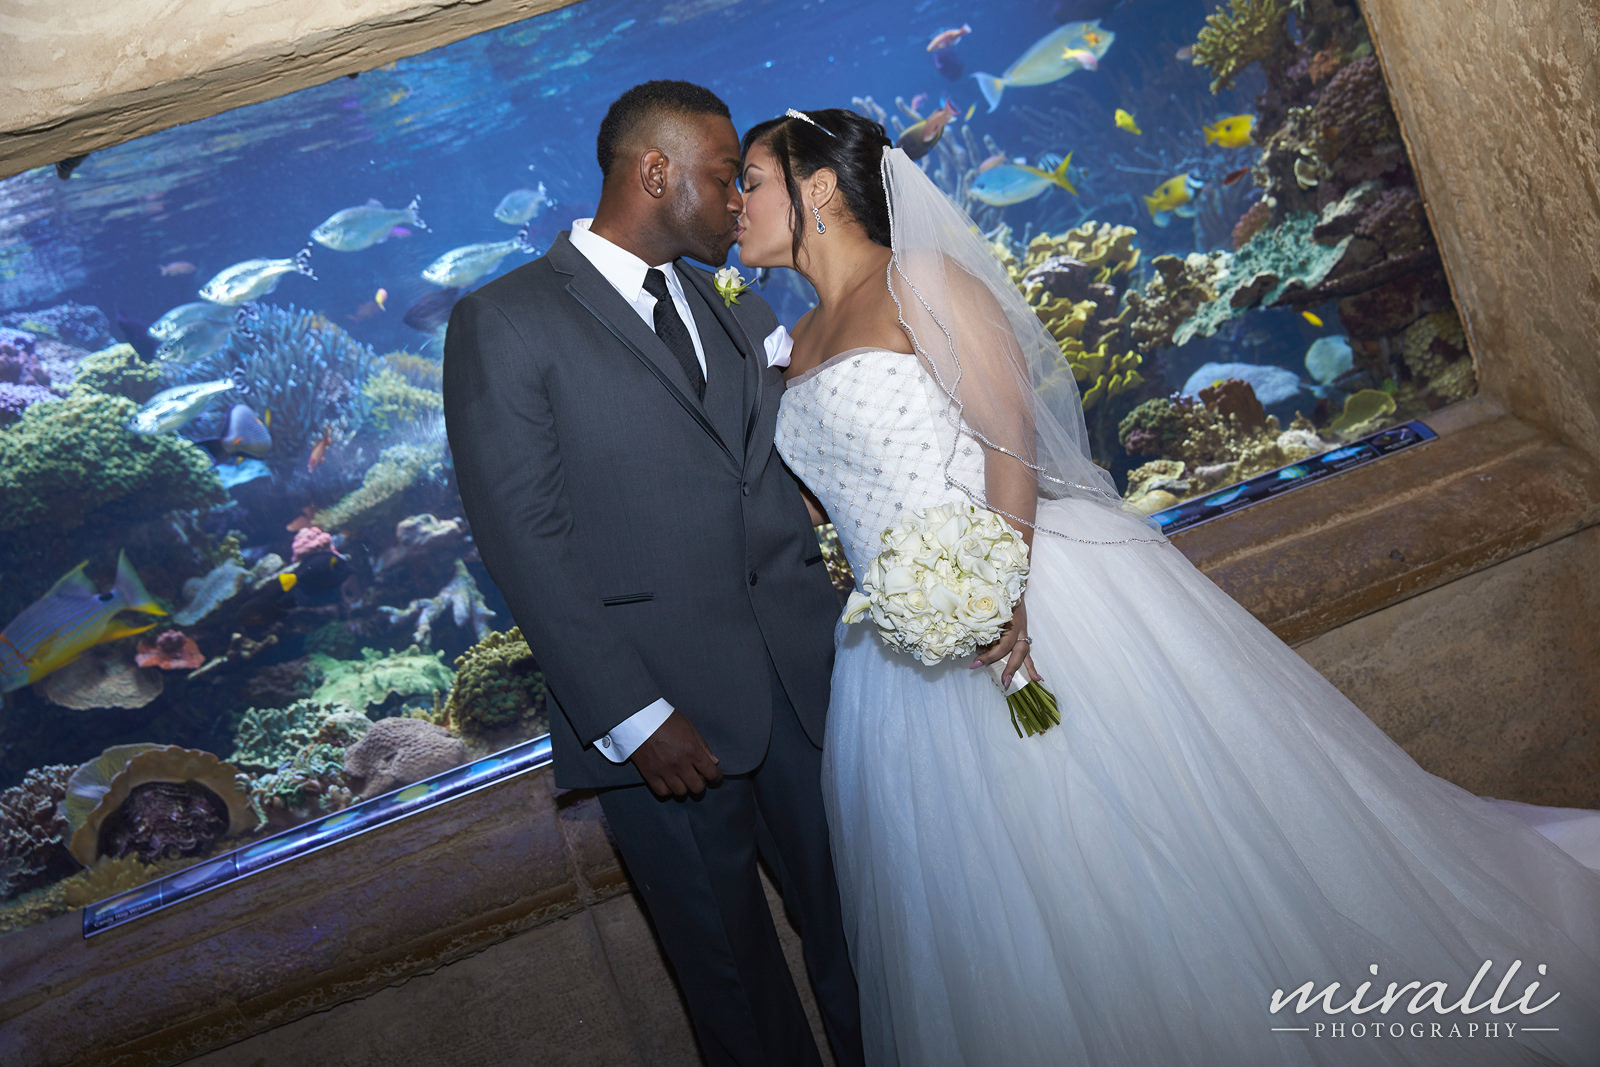 Atlantis Aquarium Wedding Photos by Miralli Photography